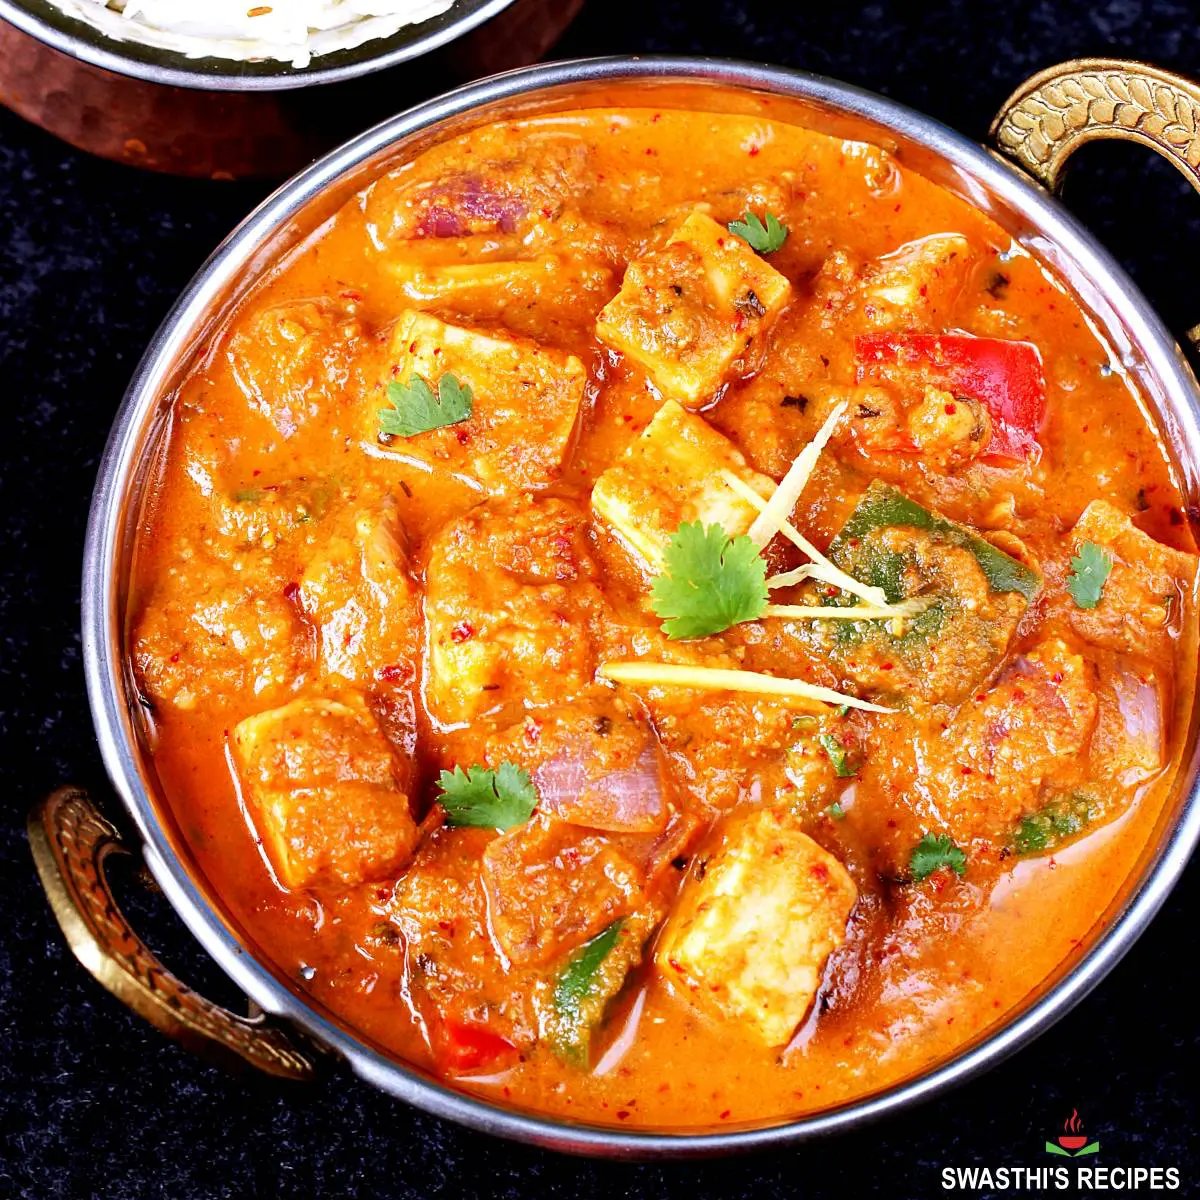 Kadai paneer recipe made with kadai masala, paneer, bell peppers and spices